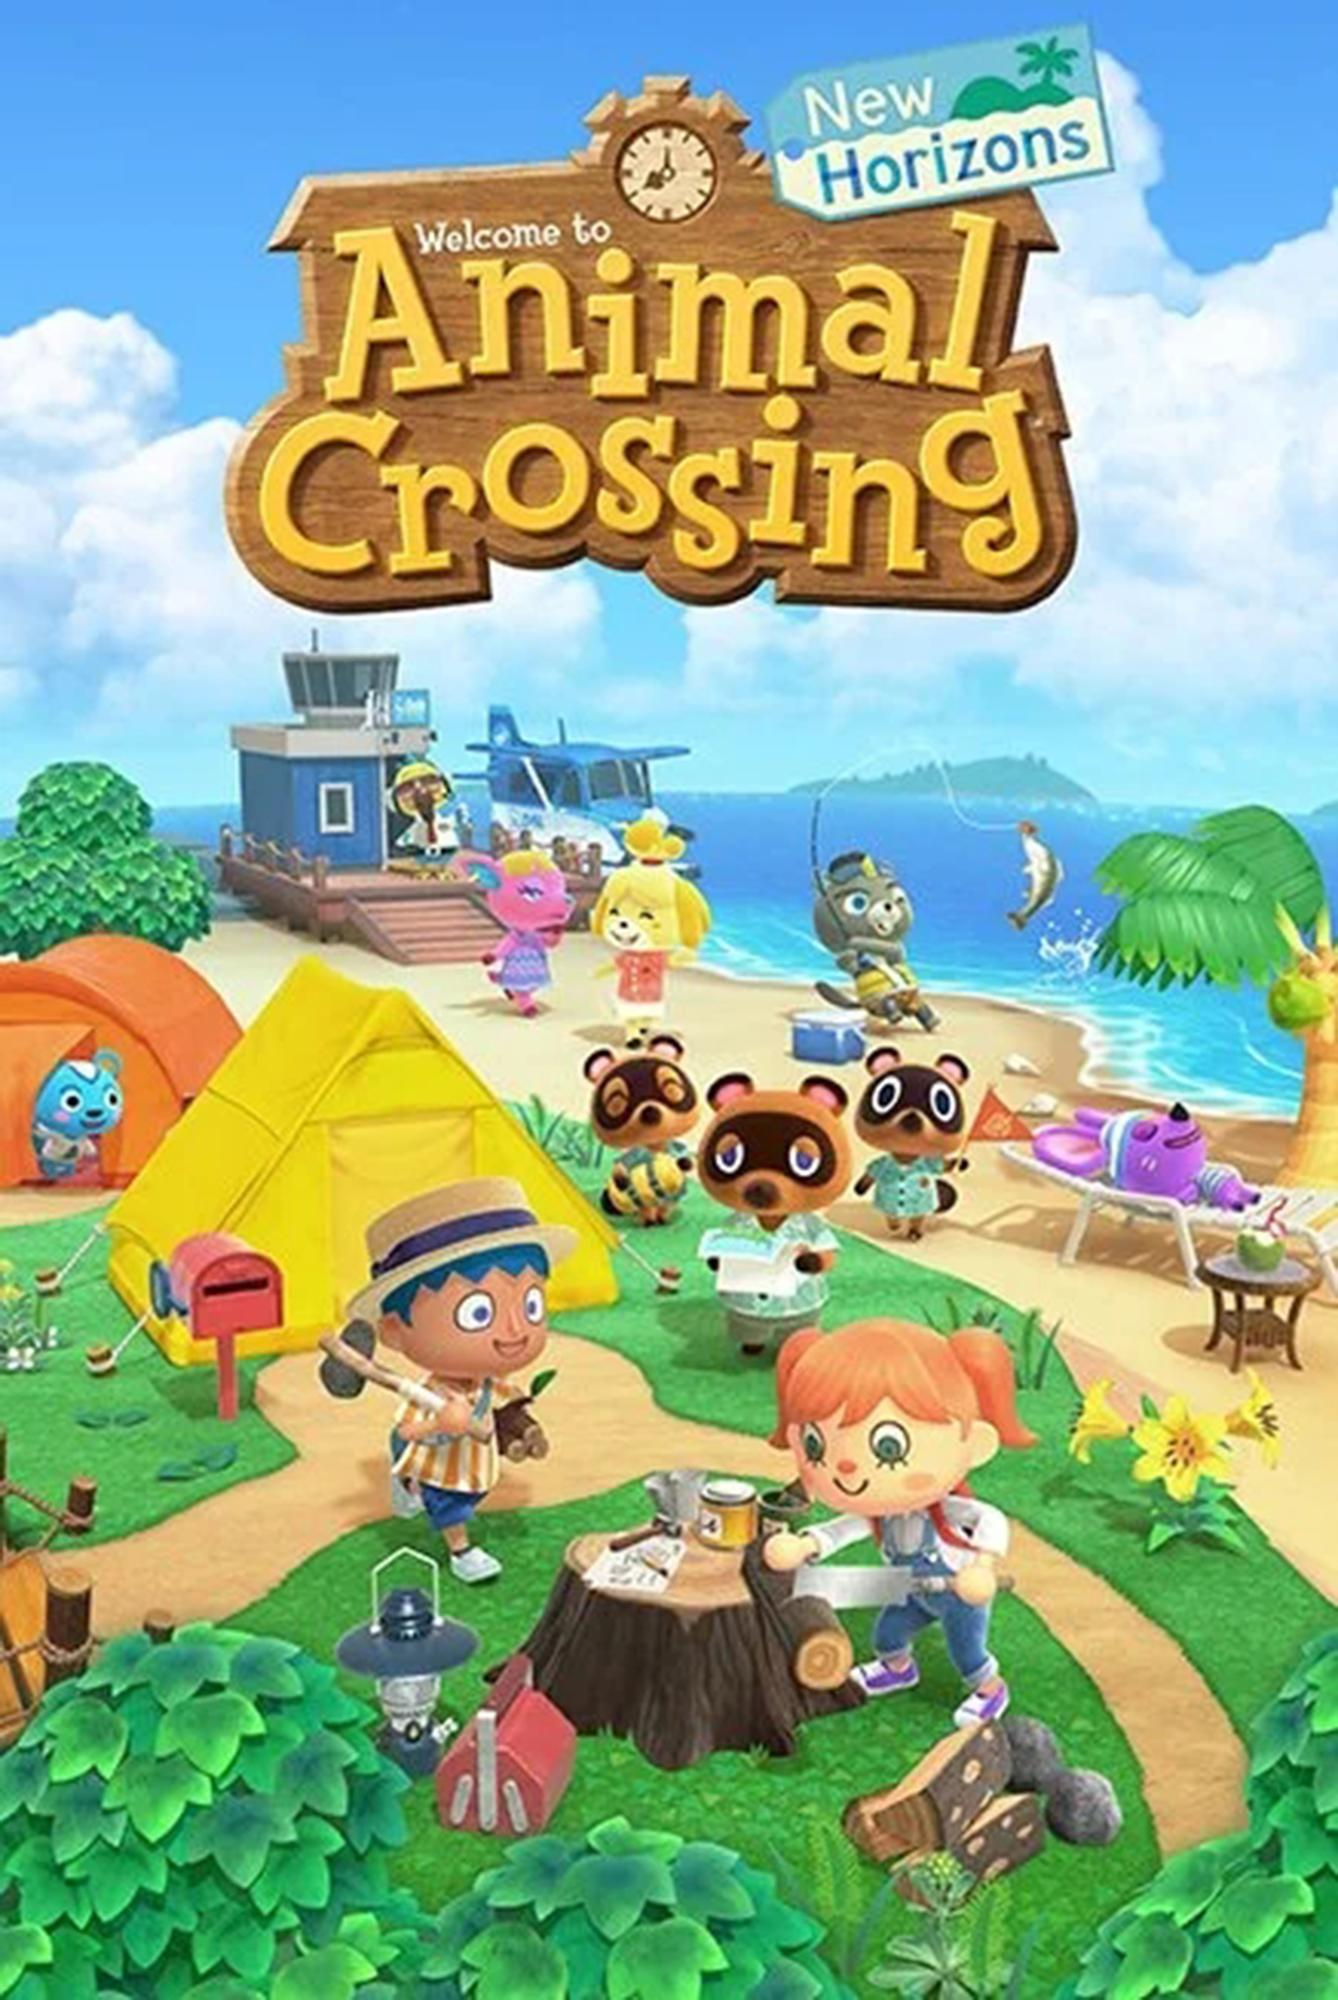 PYRAMID INTERNATIONAL Animal Crossing Poster New Großformatige Horizons Poster